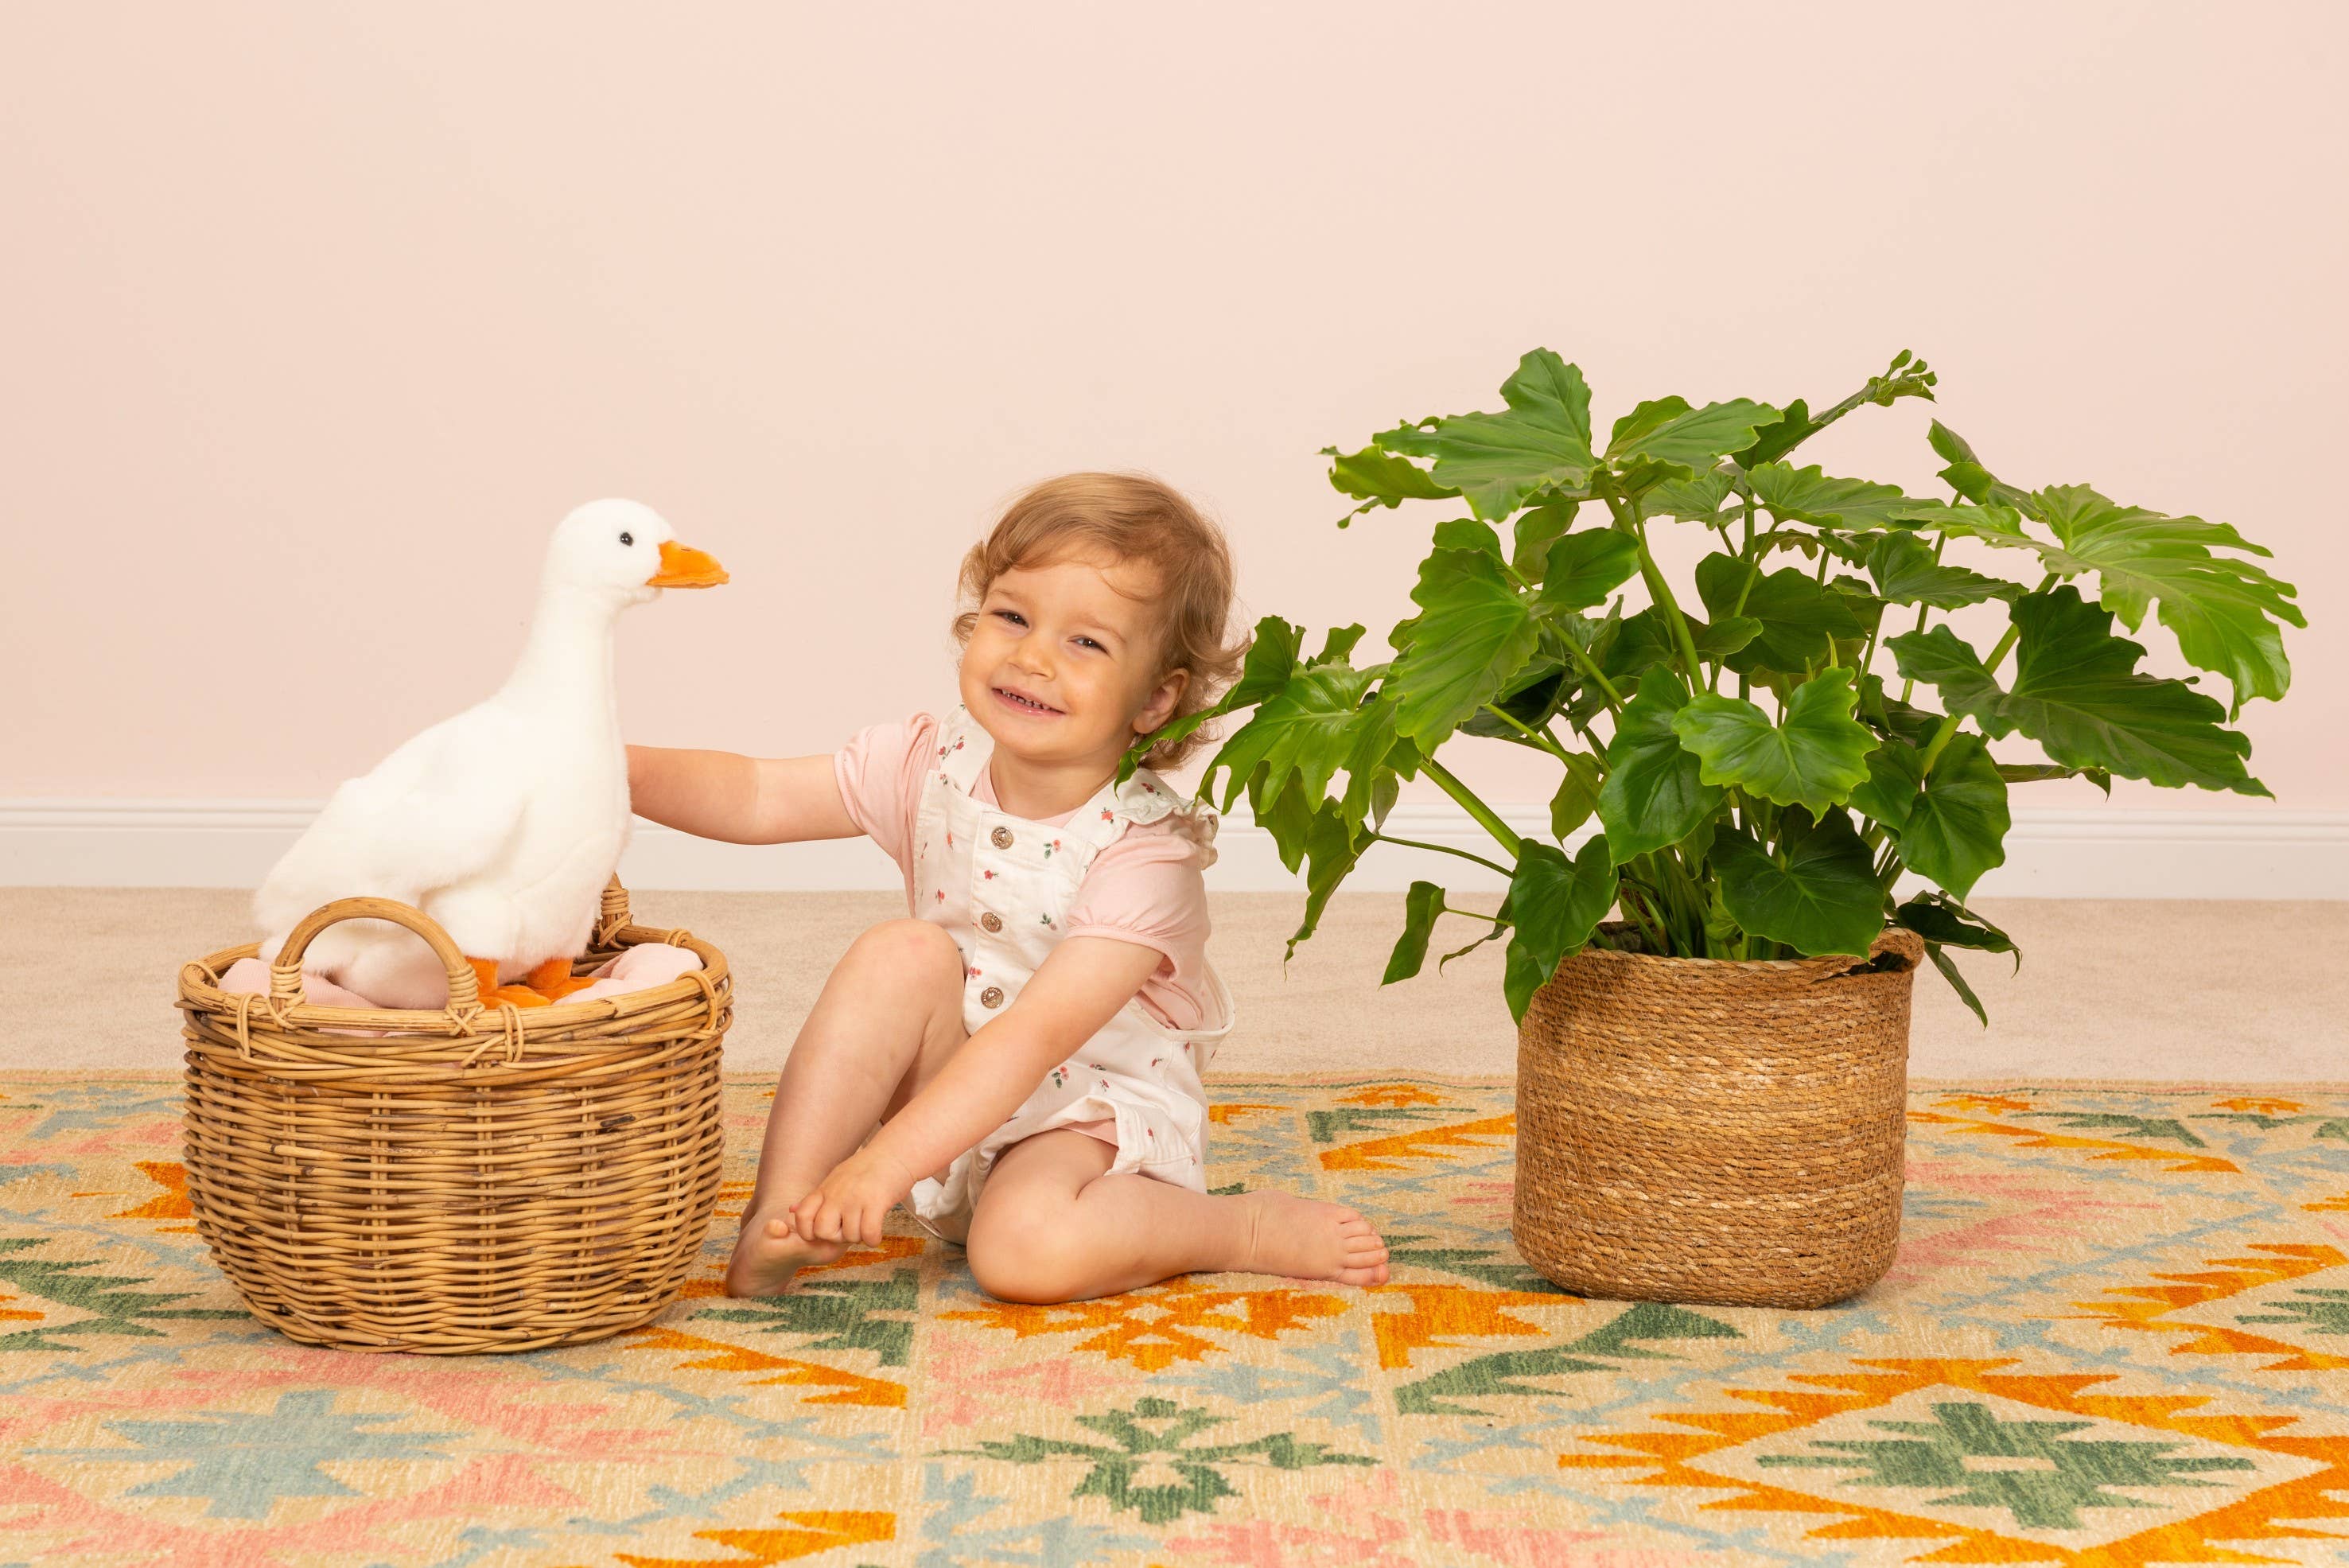 Plush White Goose standing 31 cm Realistic Eco Friendly Adorable